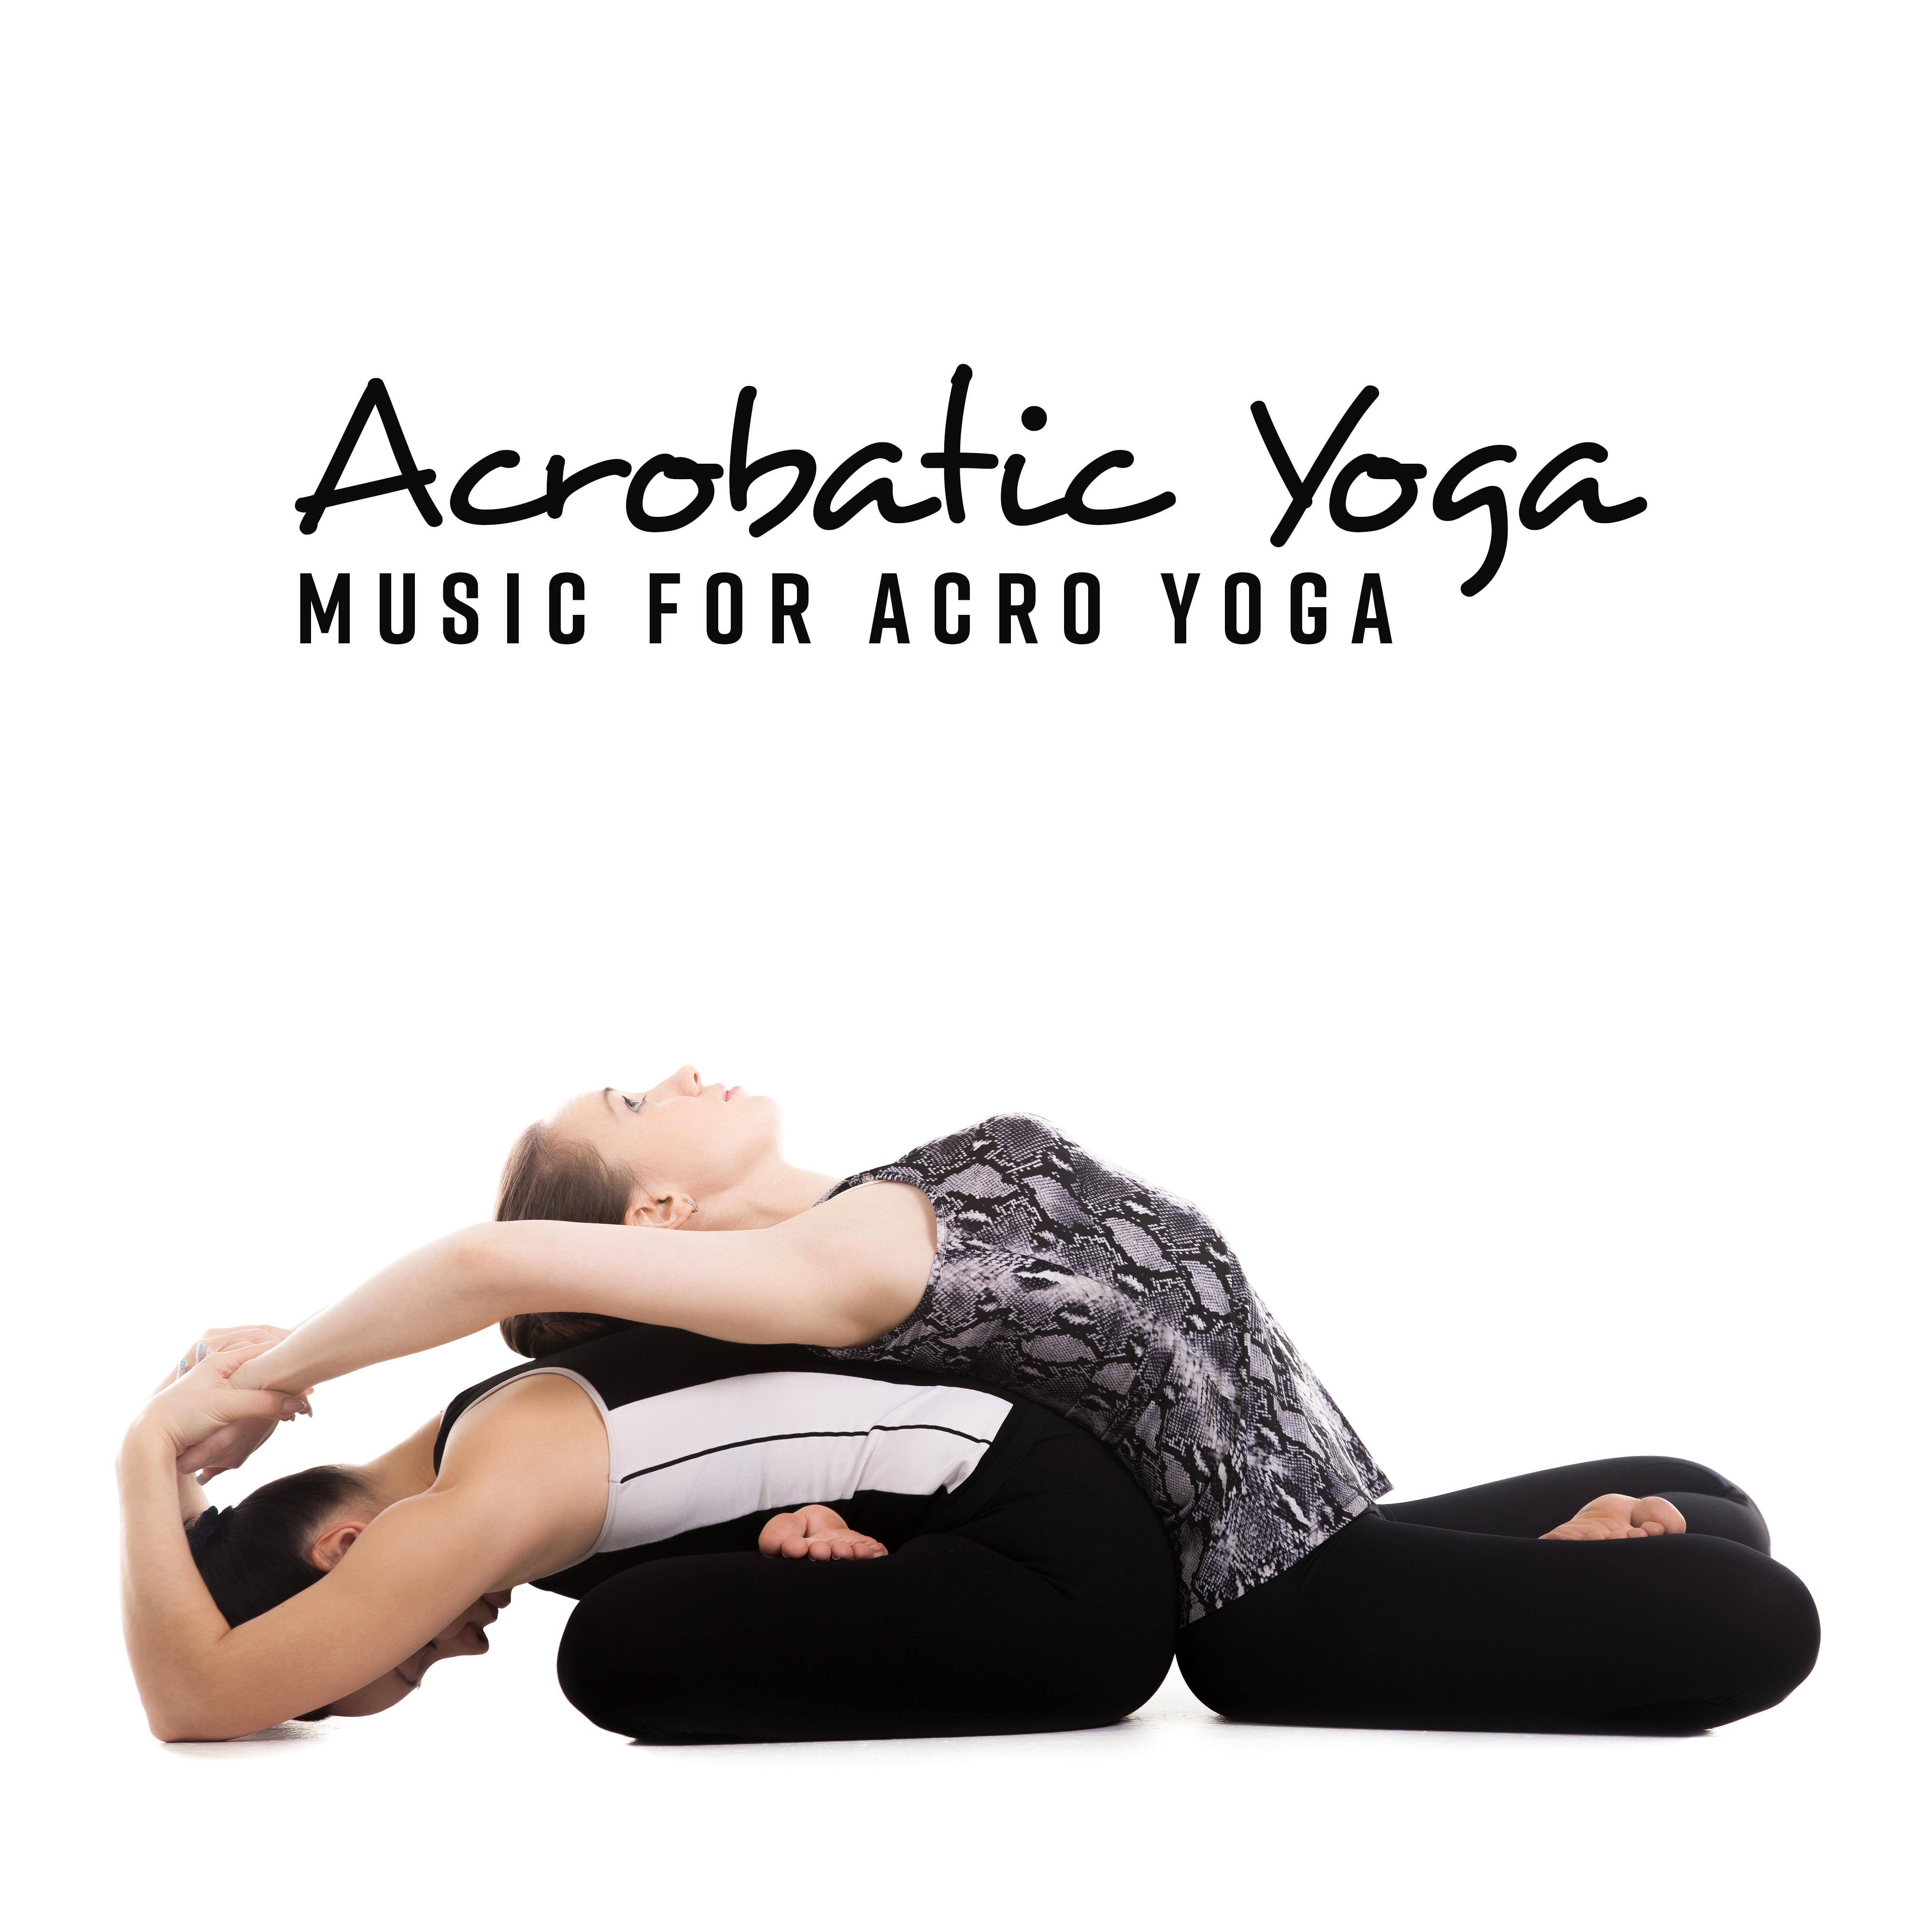 Acrobatic Yoga: Music for Acro Yoga